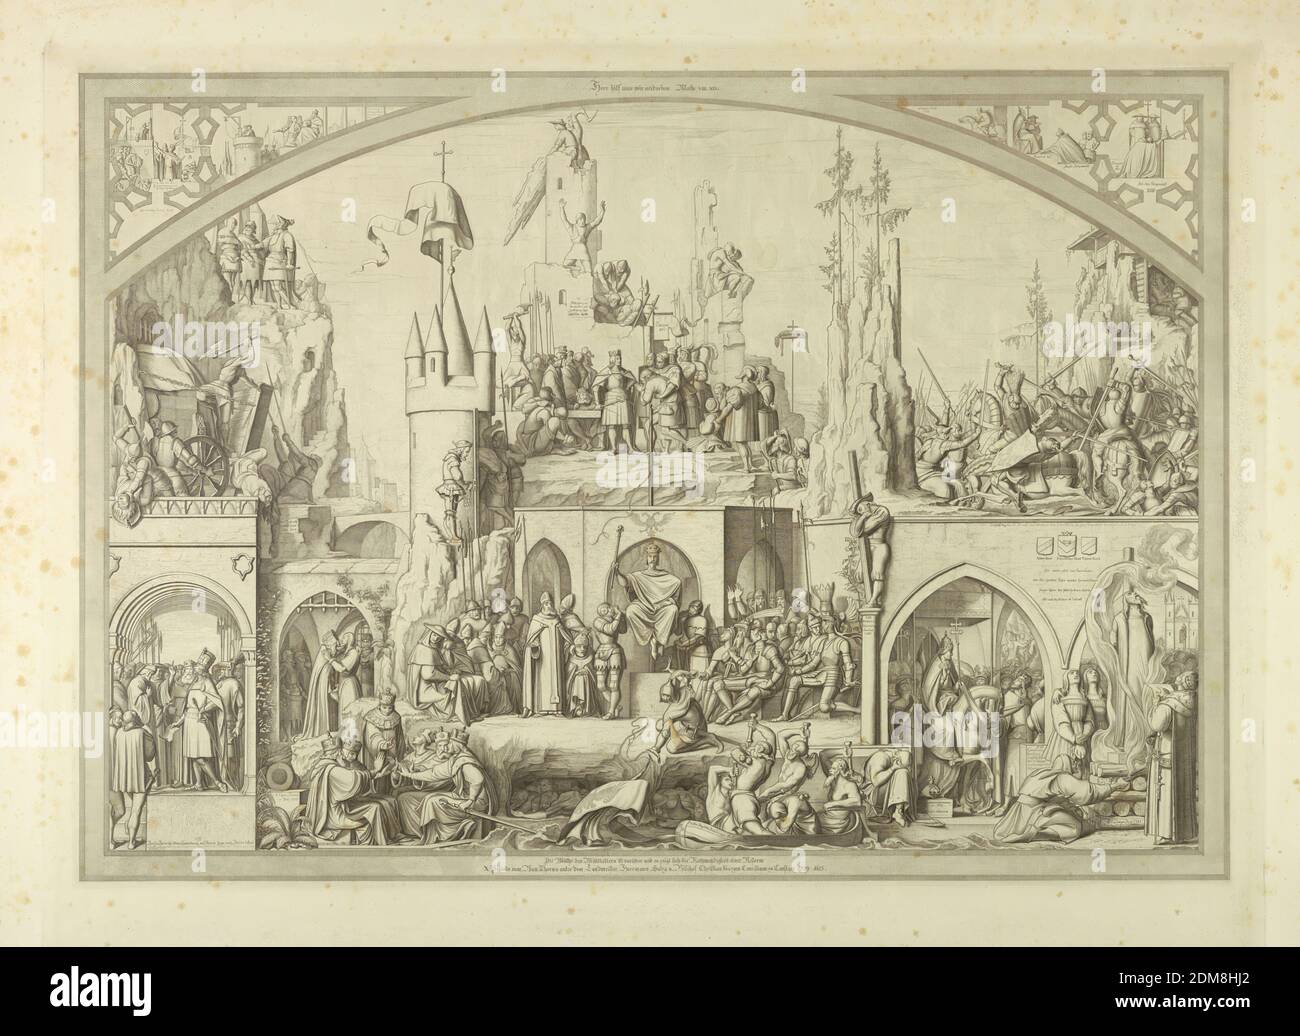 The Reforms of 1229-1415, Julius Caesar Thaeter, German, 1804 - 1870, Steel engraving on paper, Europe, 1804-1870, Print Stock Photo